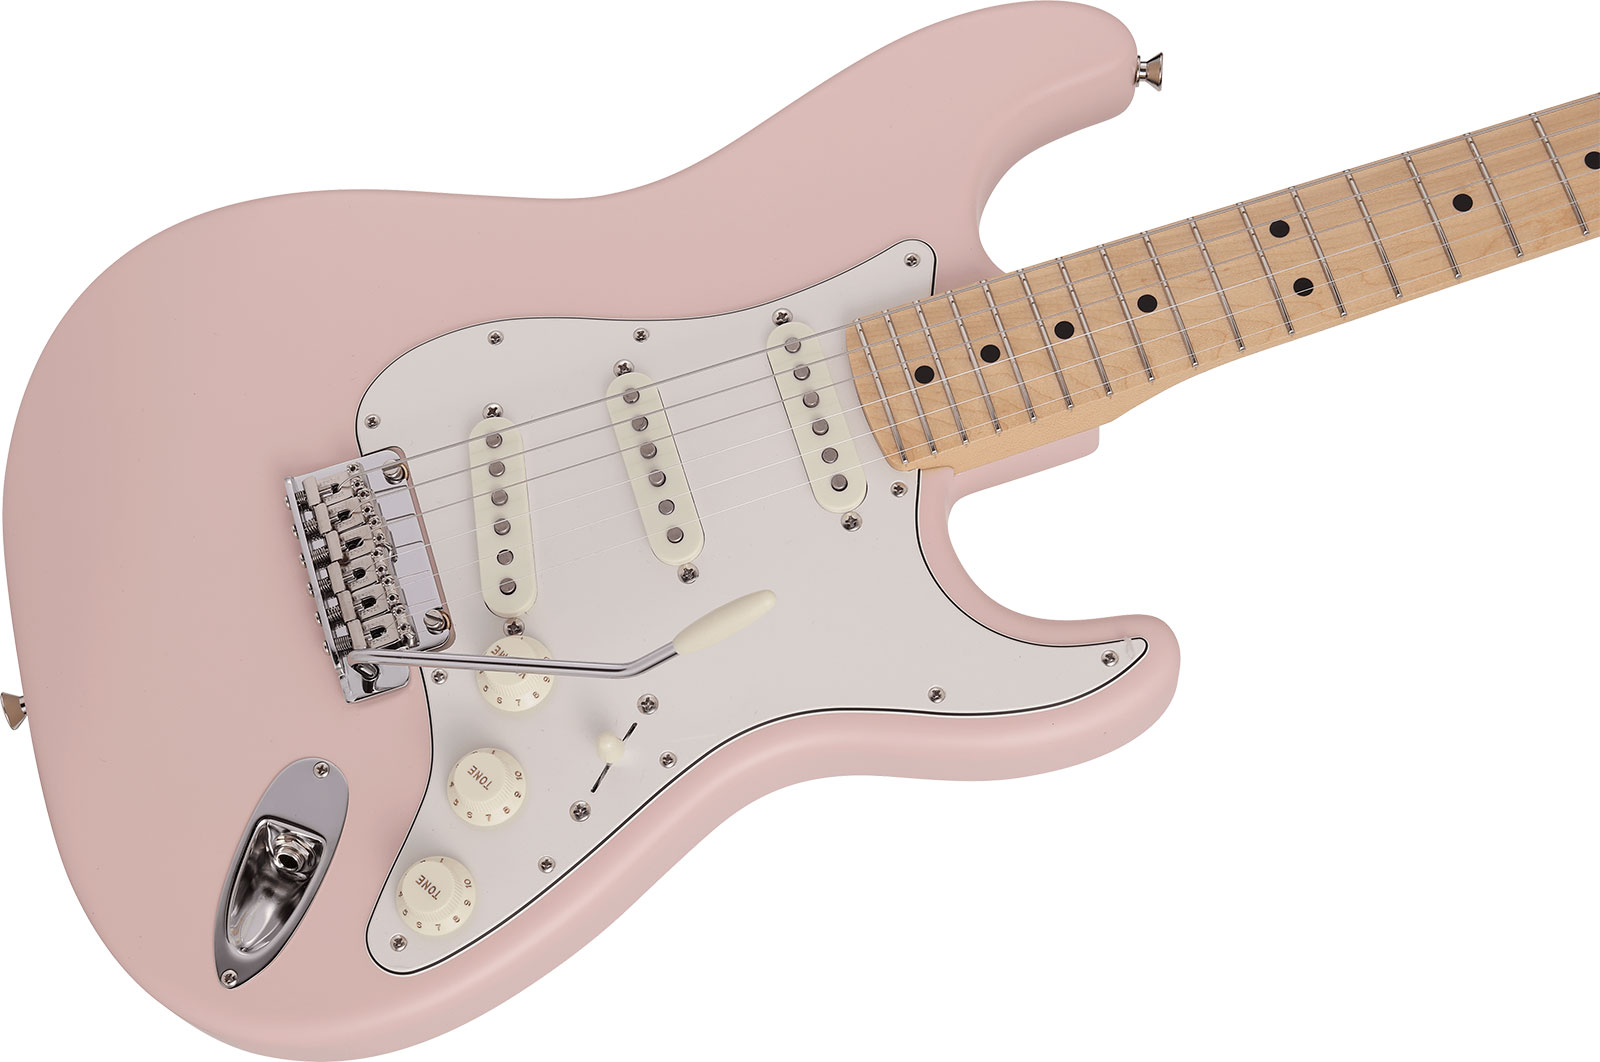 Fender Strat Junior Mij Jap 3s Trem Rw - Satin Shell Pink - Guitare Électrique Enfant - Variation 2